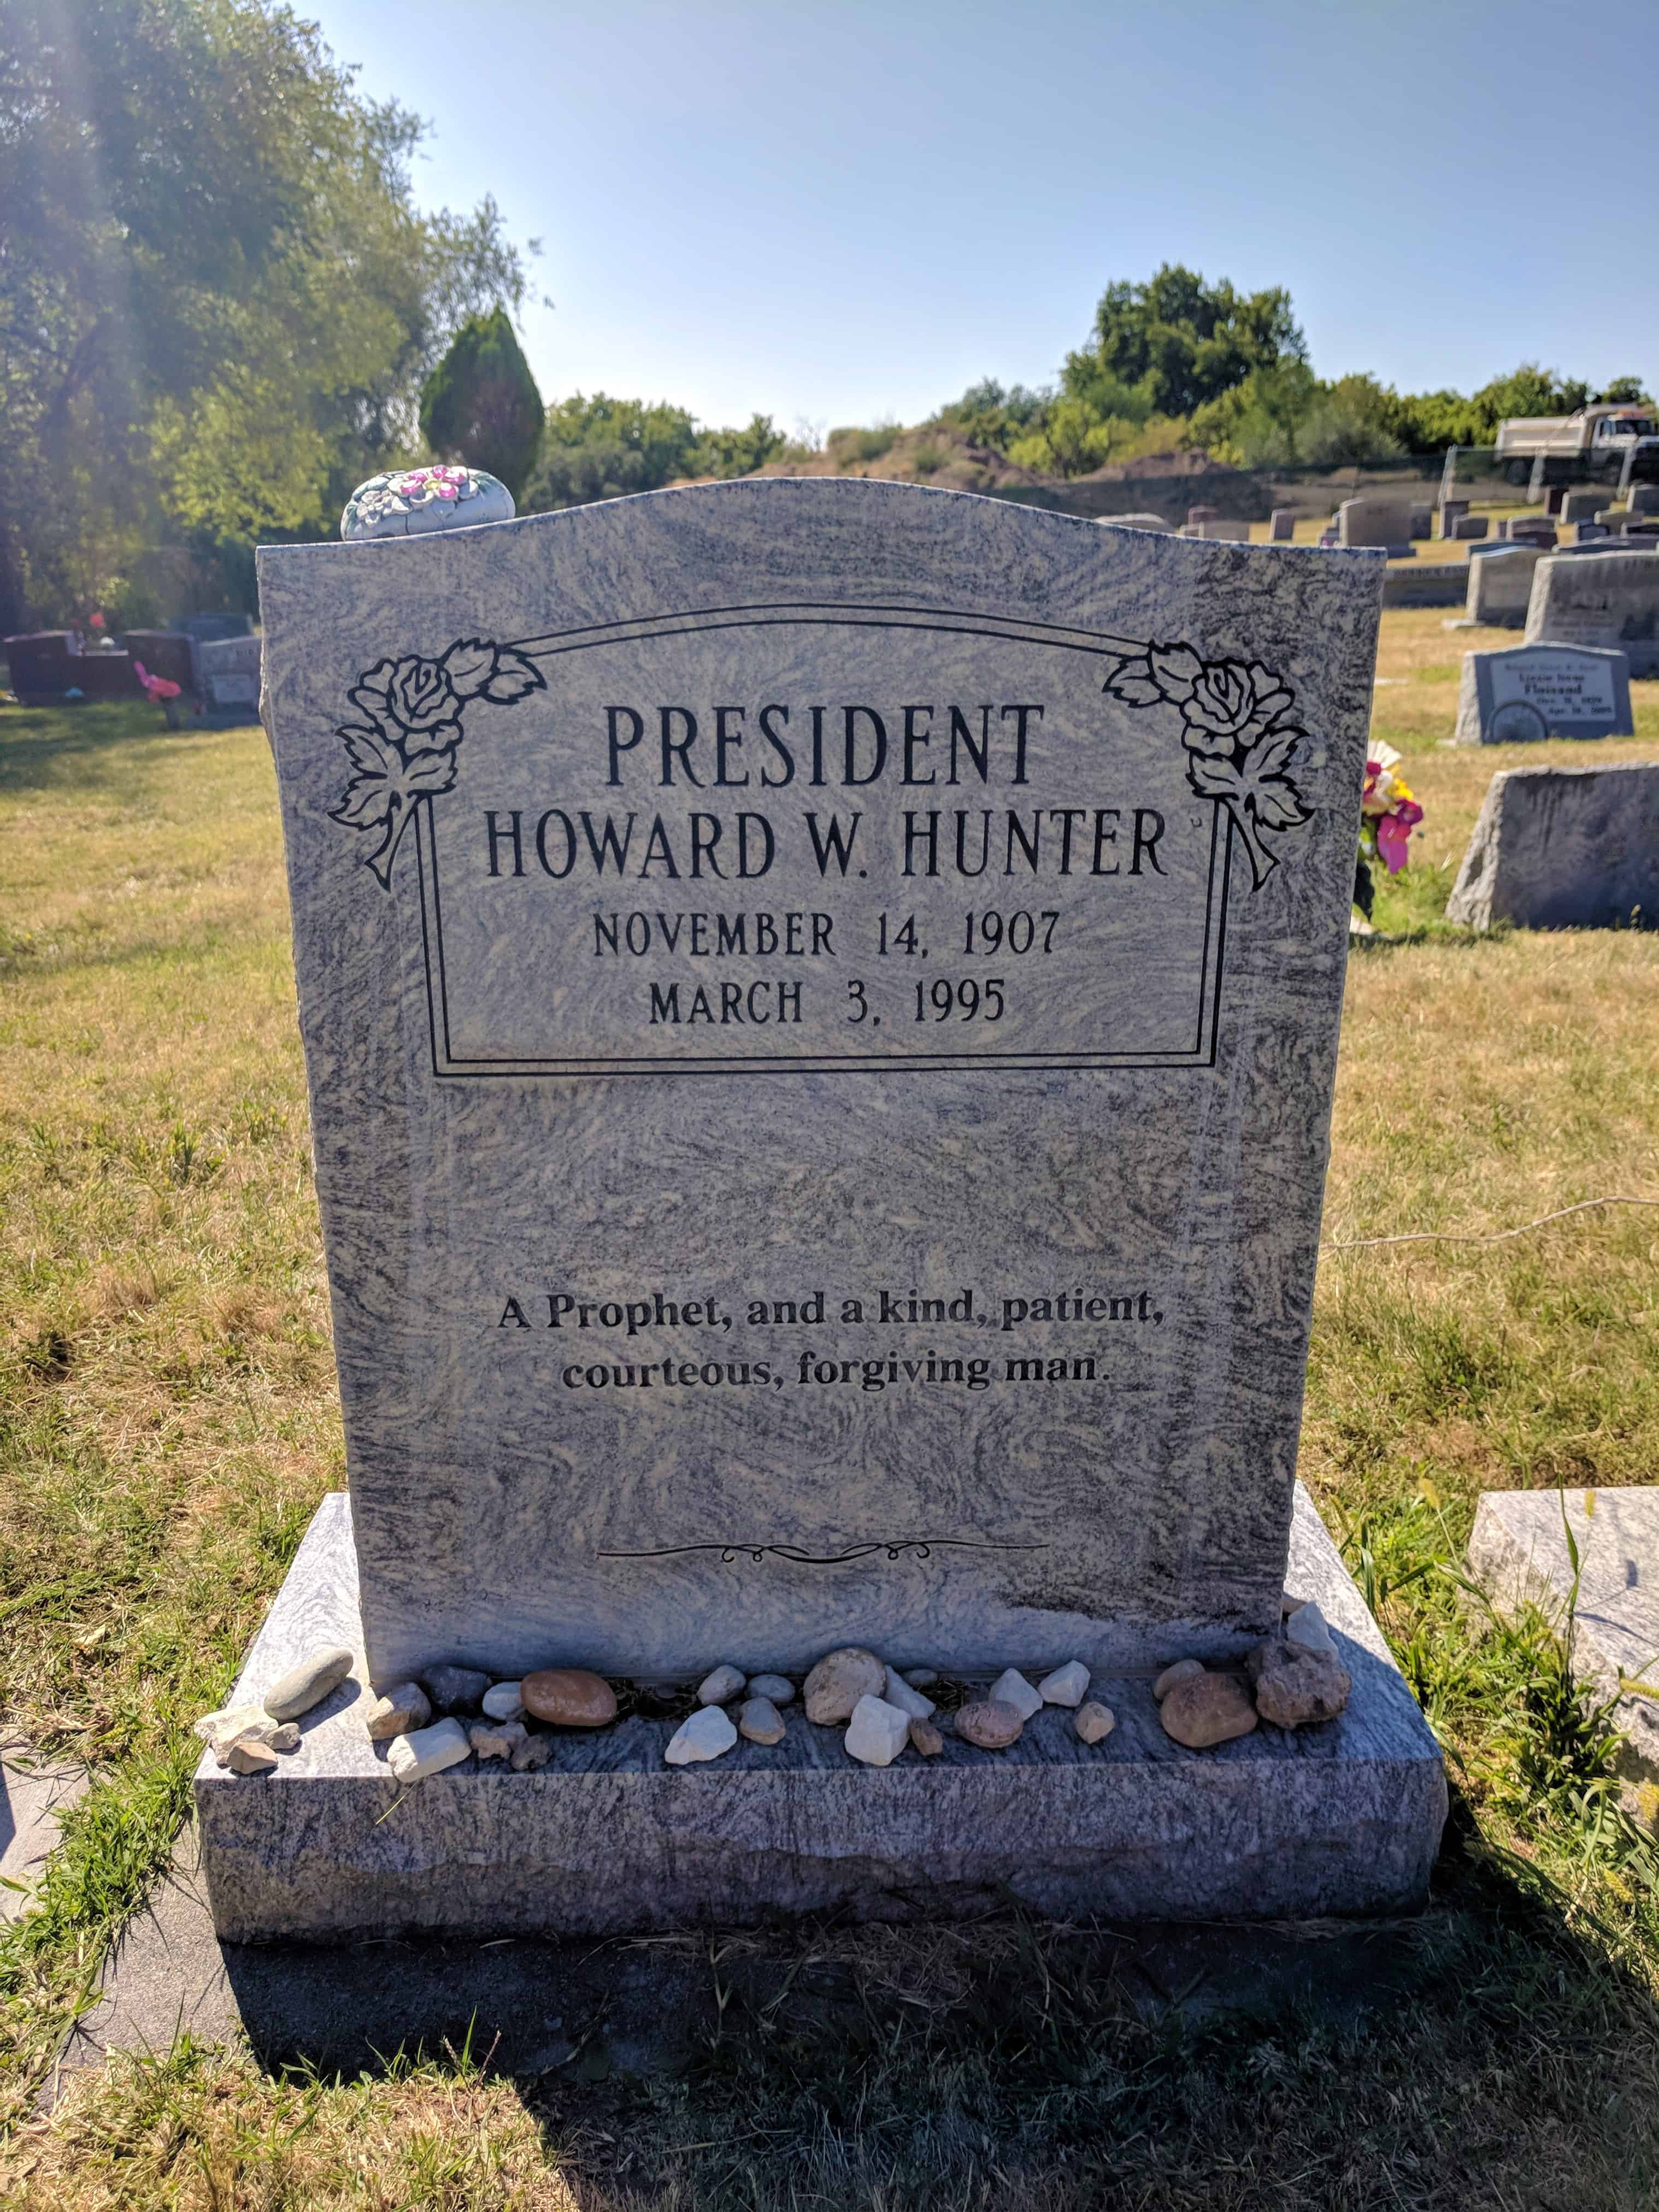 Howard W. Hunter Gravesite | JacobBarlow.com